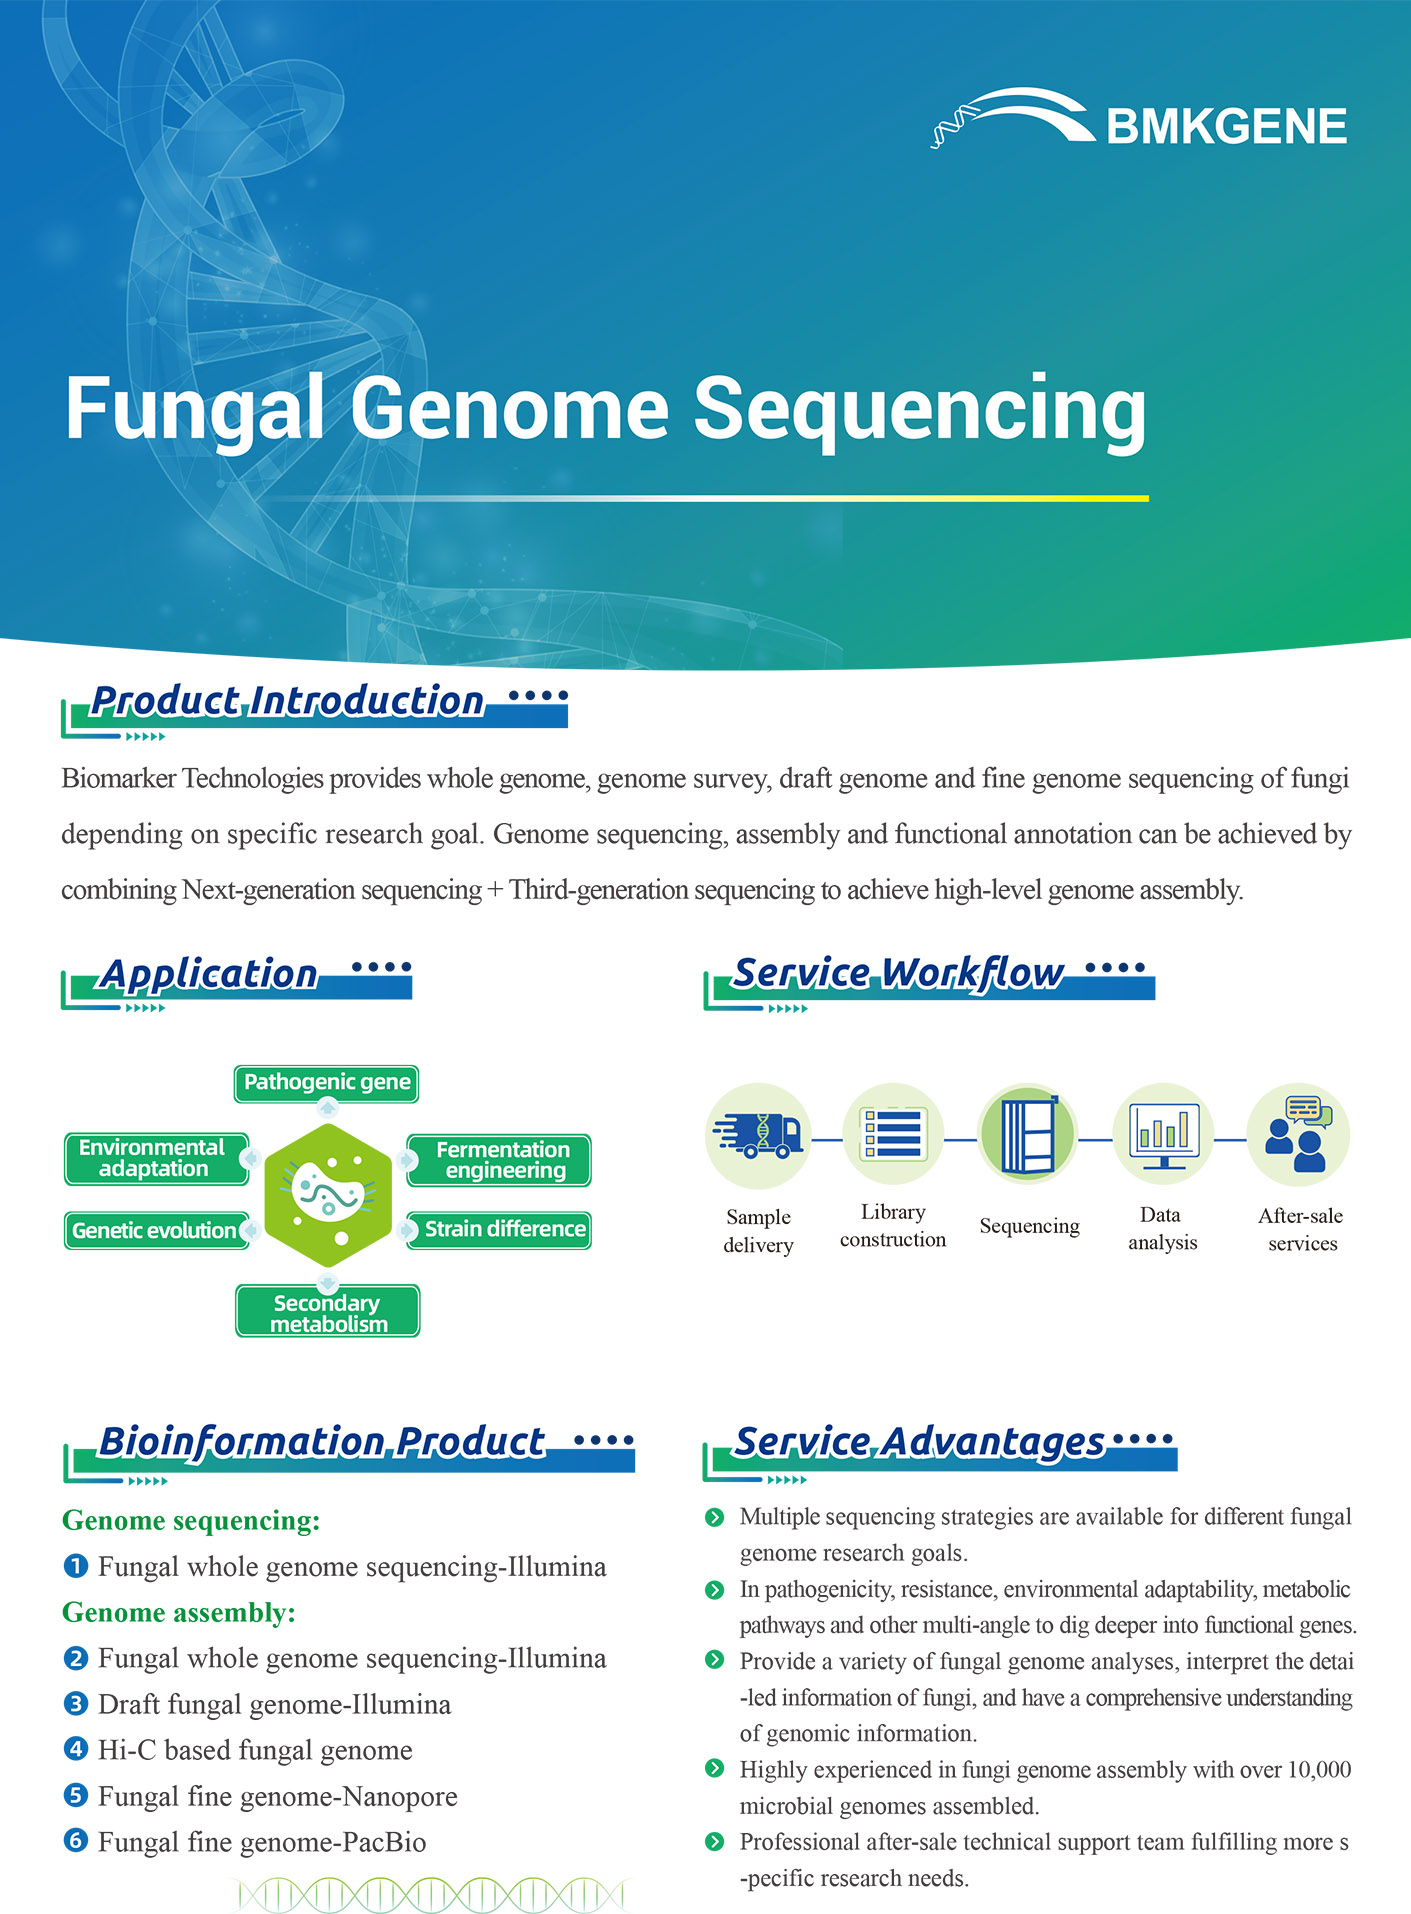 https://www.bmkgene.com/uploads/Fungal-Genome-Sequencing-BMKGENE-2023.121.pdf